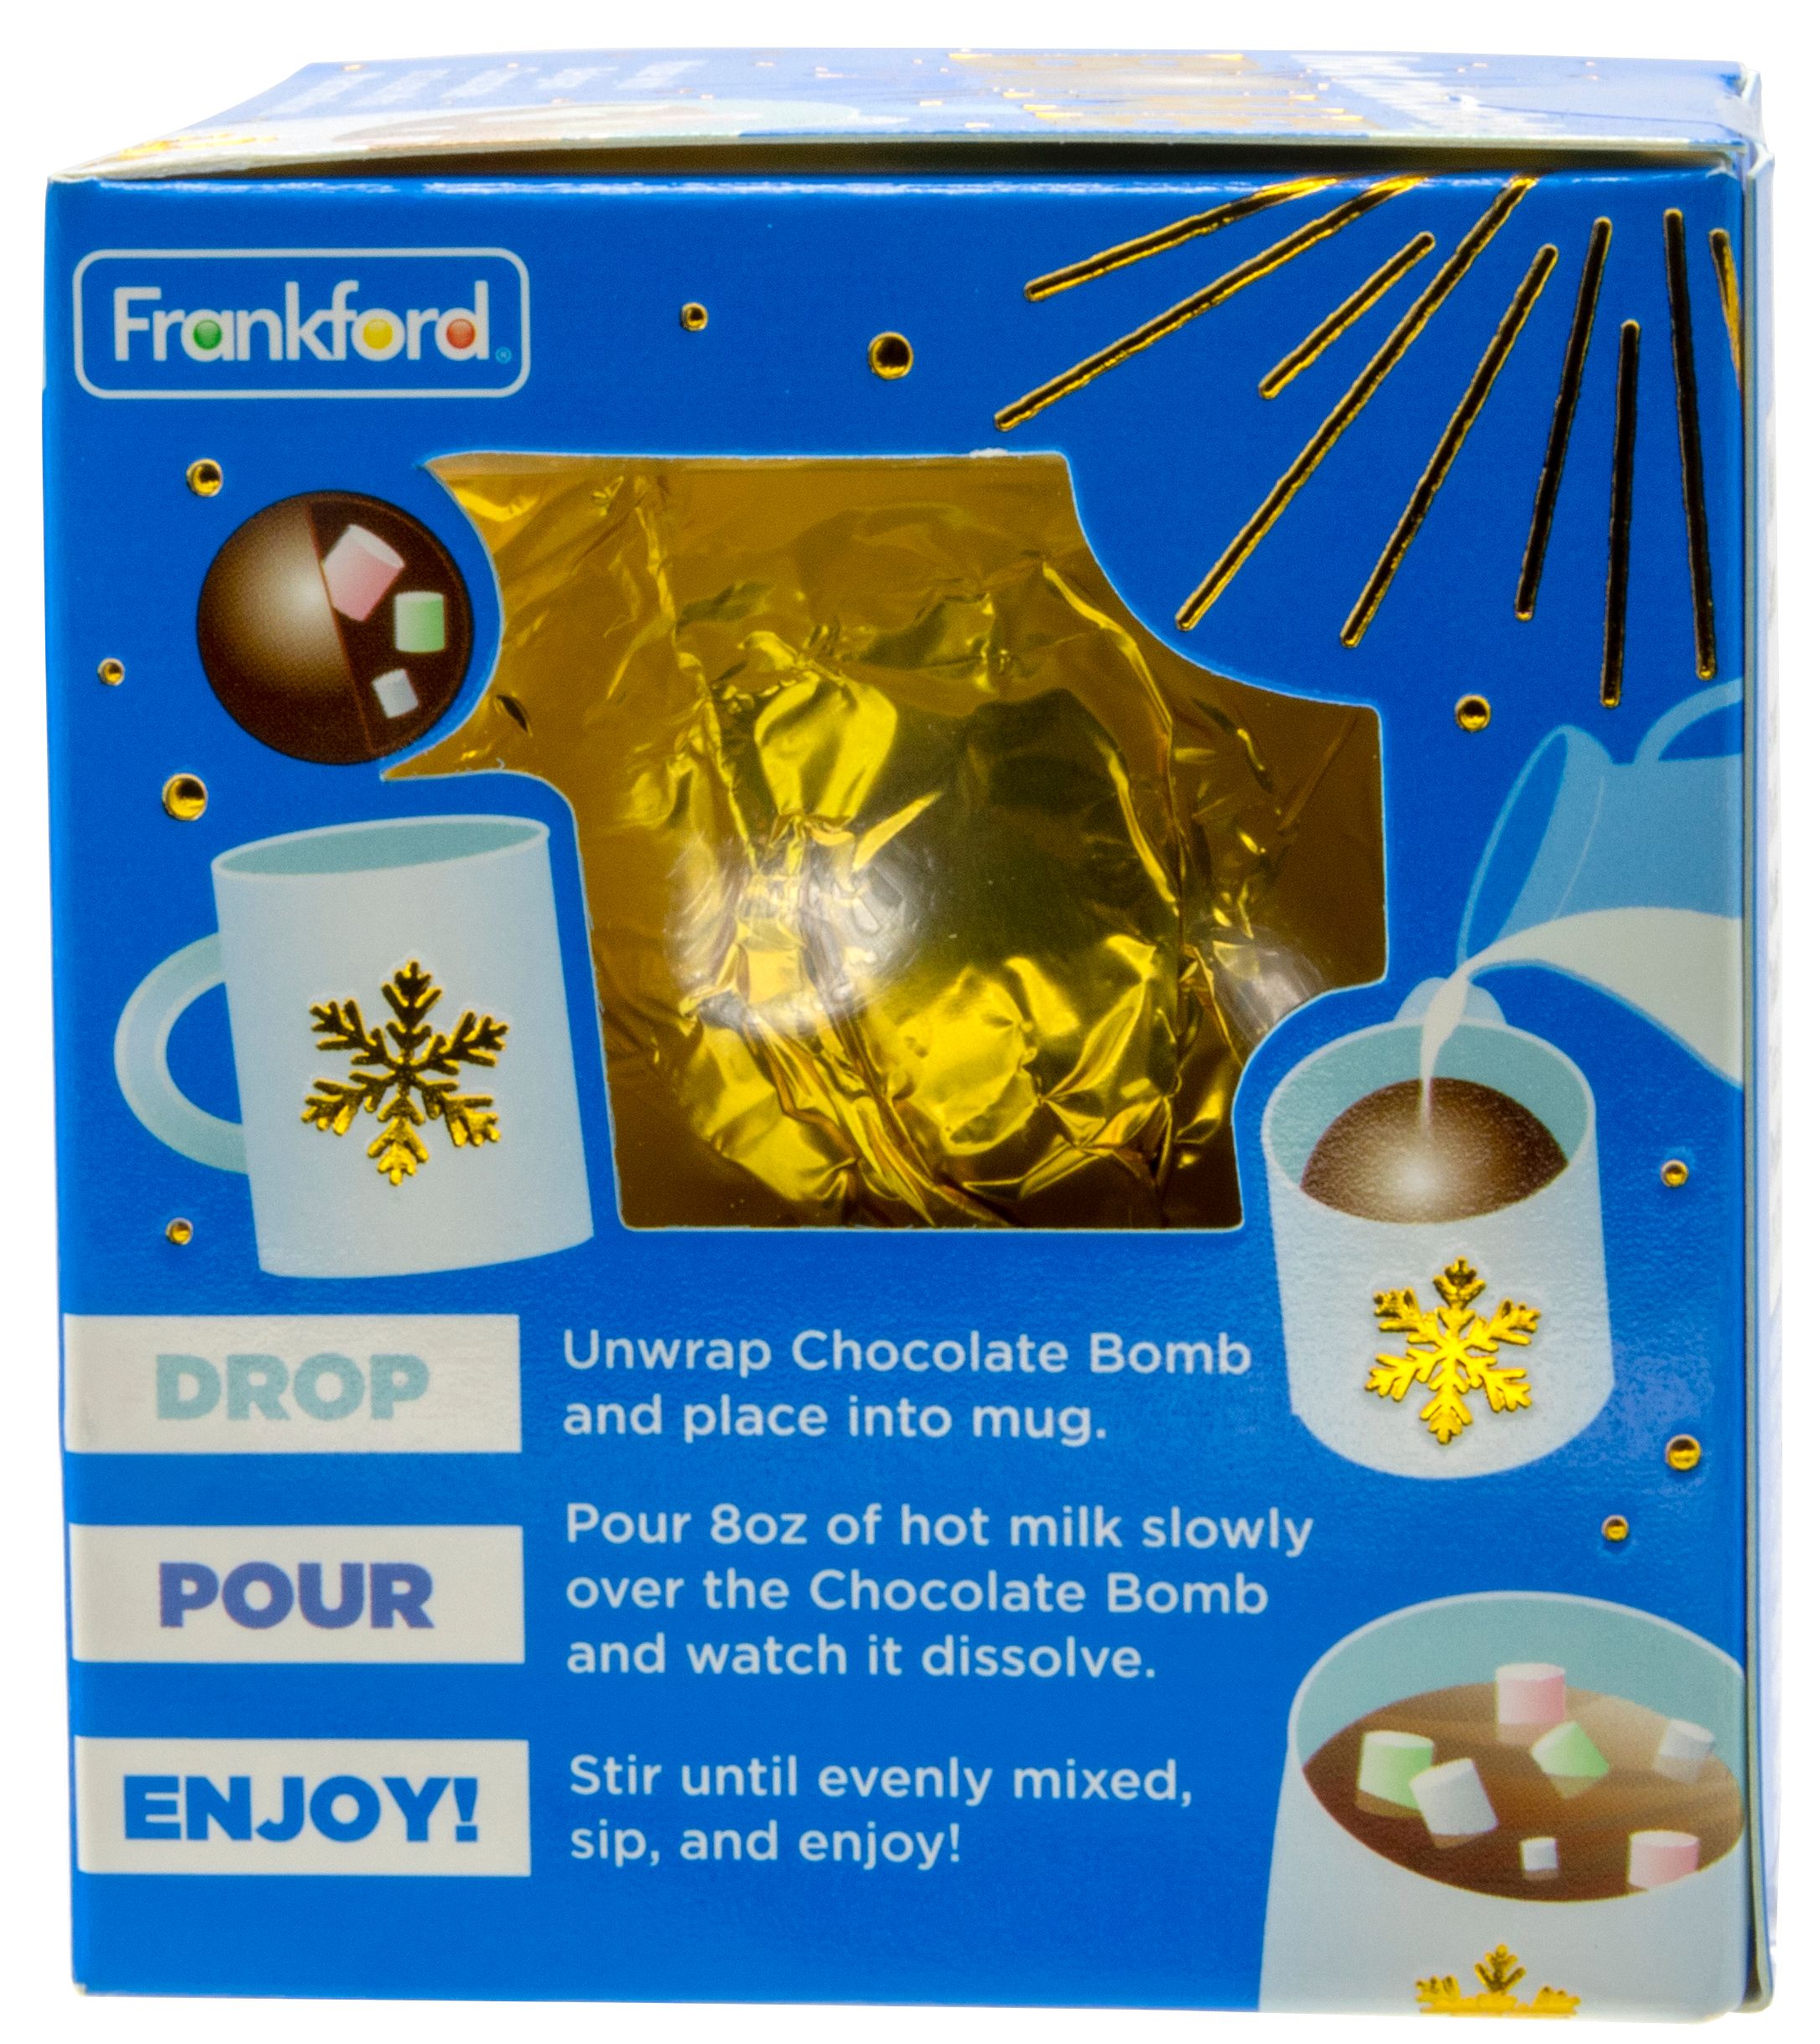 Frankford Original Belgian Milk Chocolate Hot Chocolate Bomb, 1.6 oz - image 3 of 5